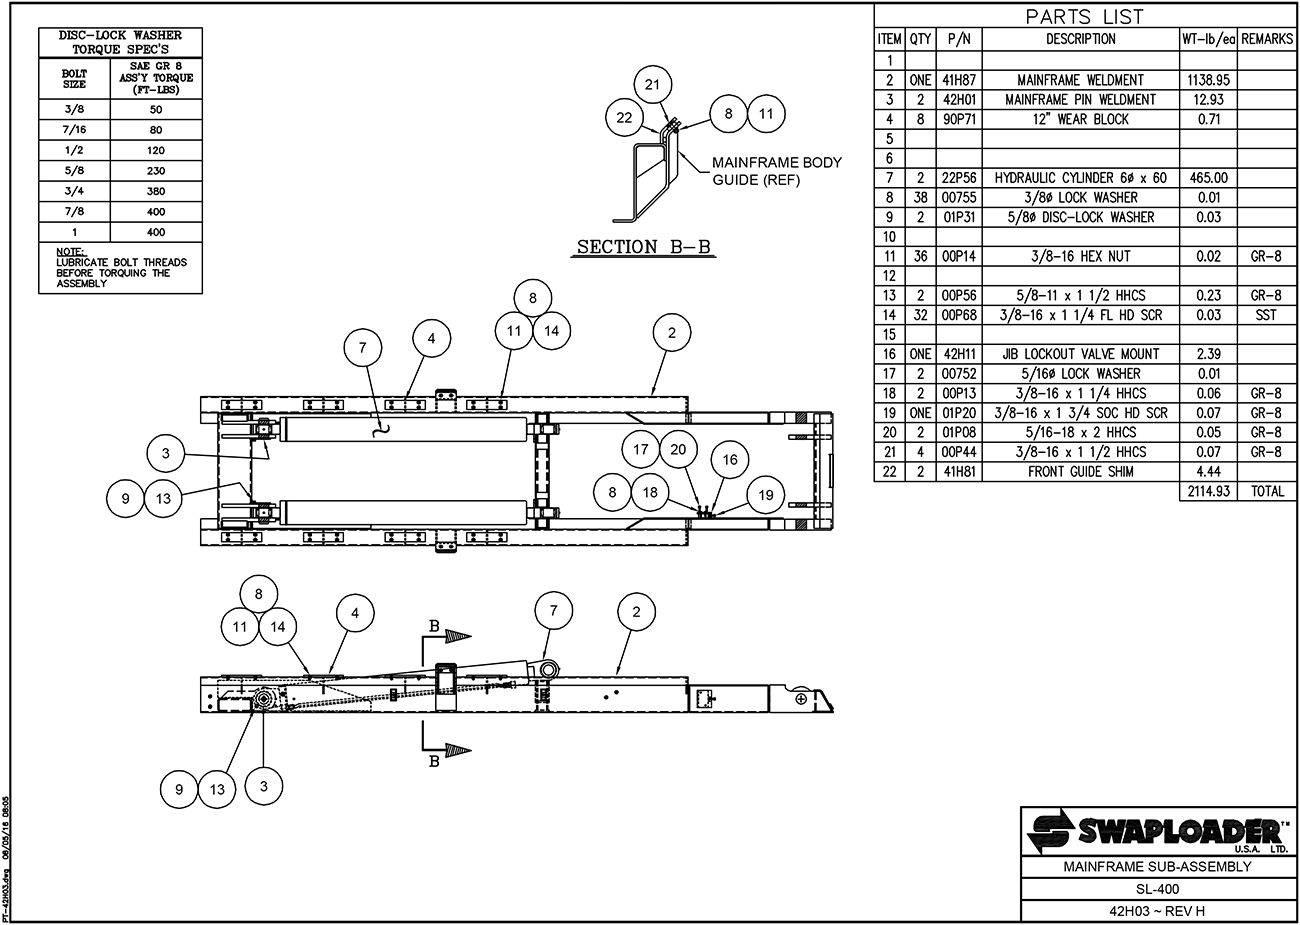 SL-400 Mainframe Sub-Assembly Diagram